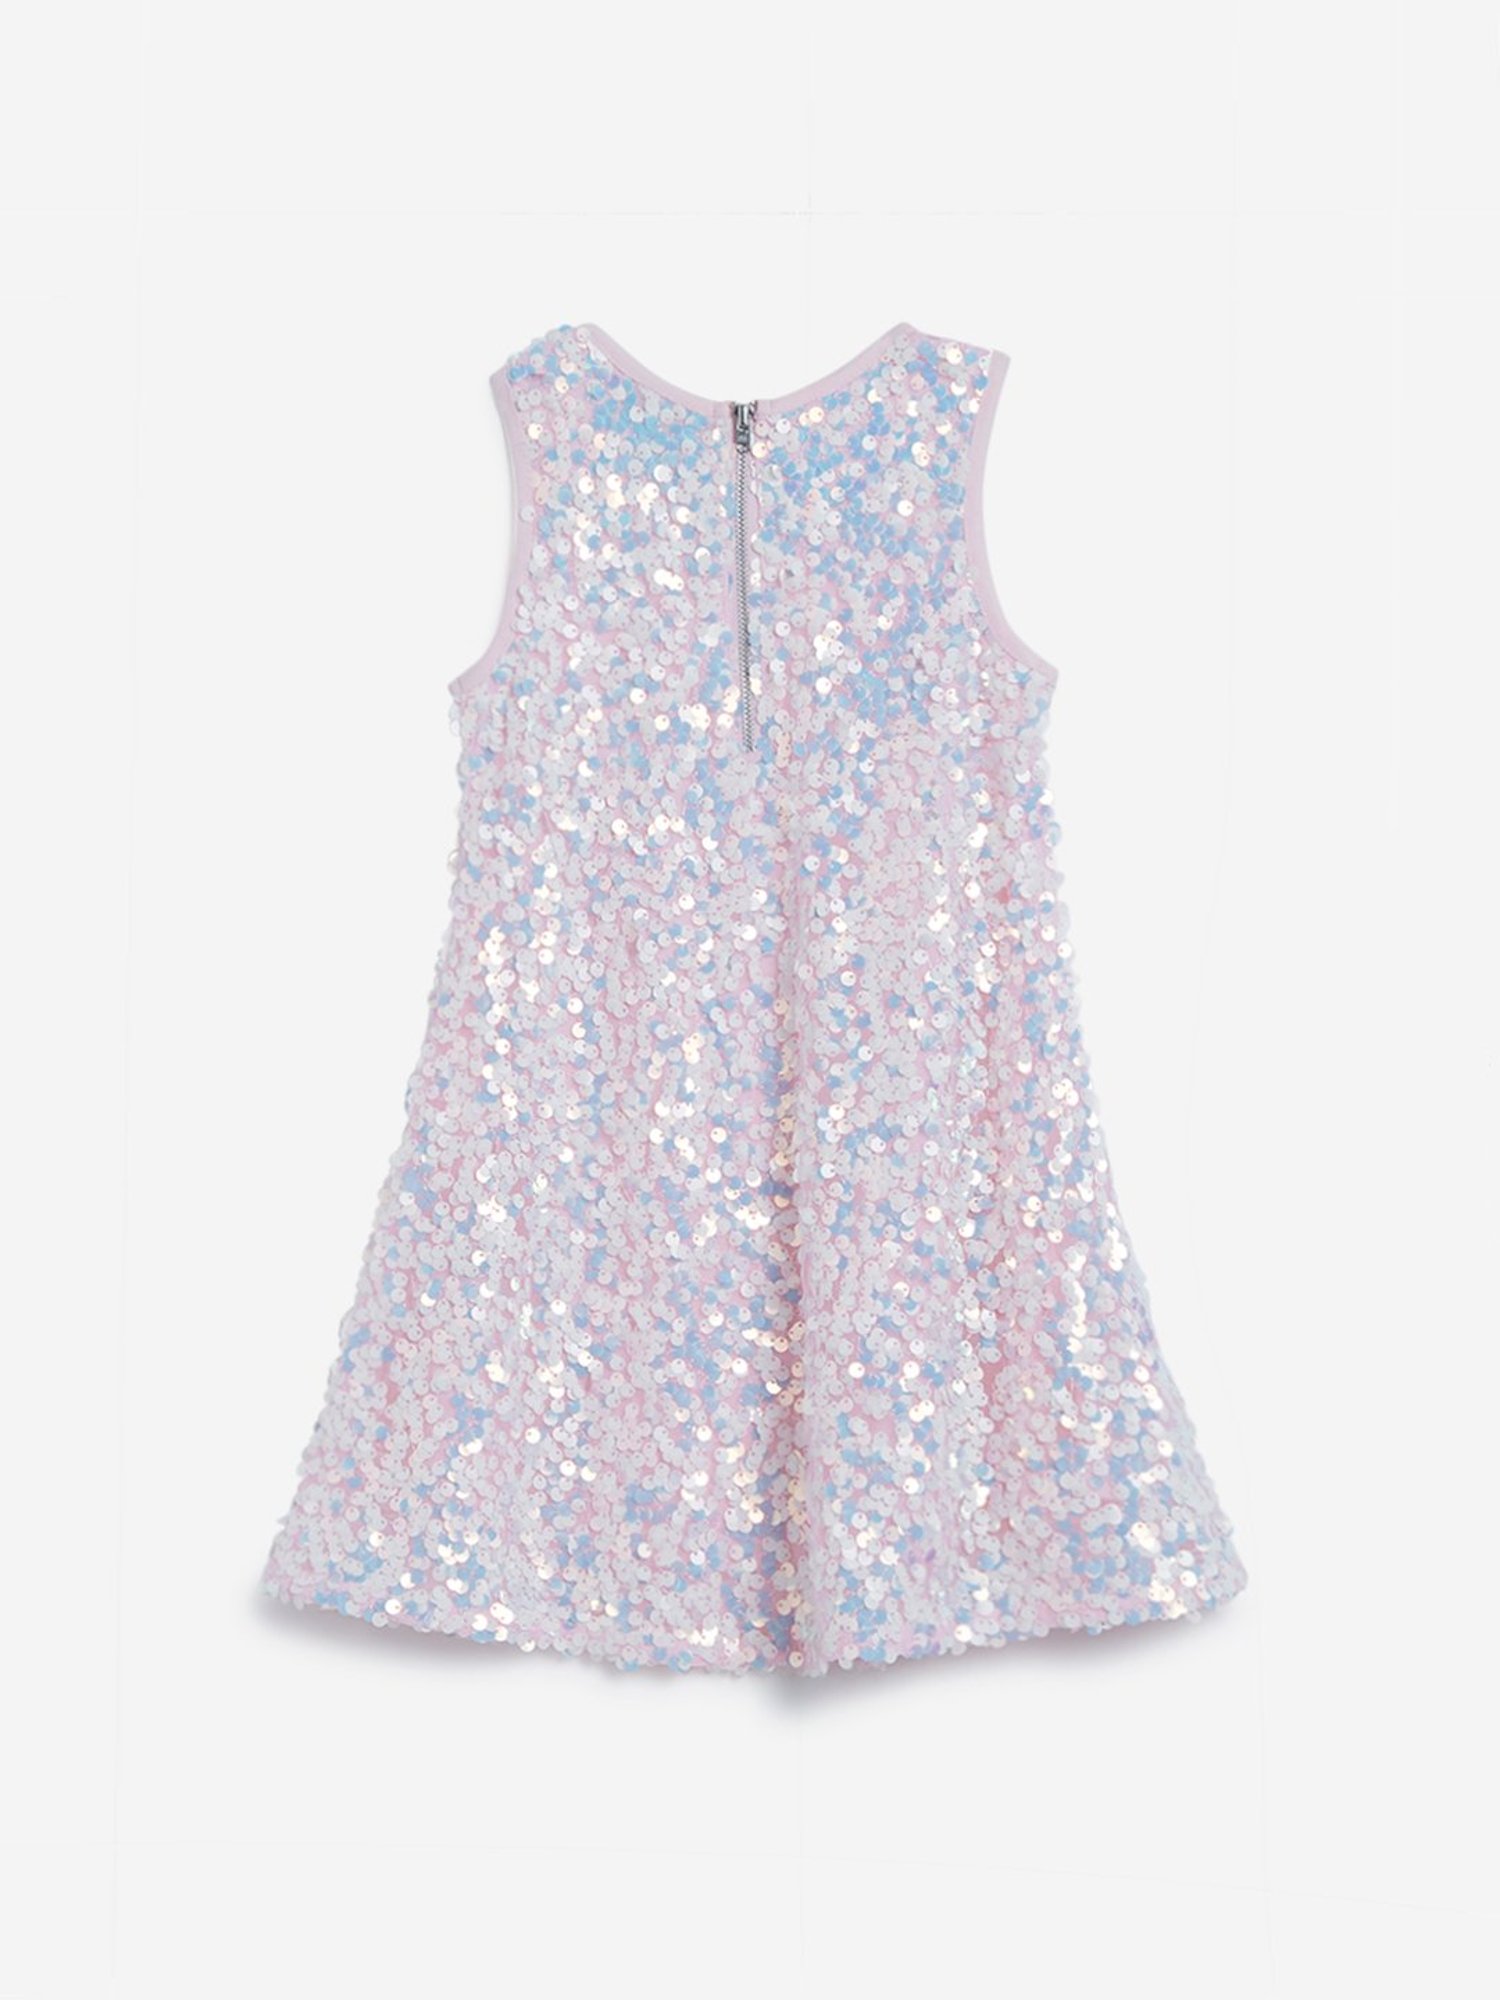 Shop Online Girls Light Blue Sleeveless Sequin Embellished Party Dress at  ₹2059